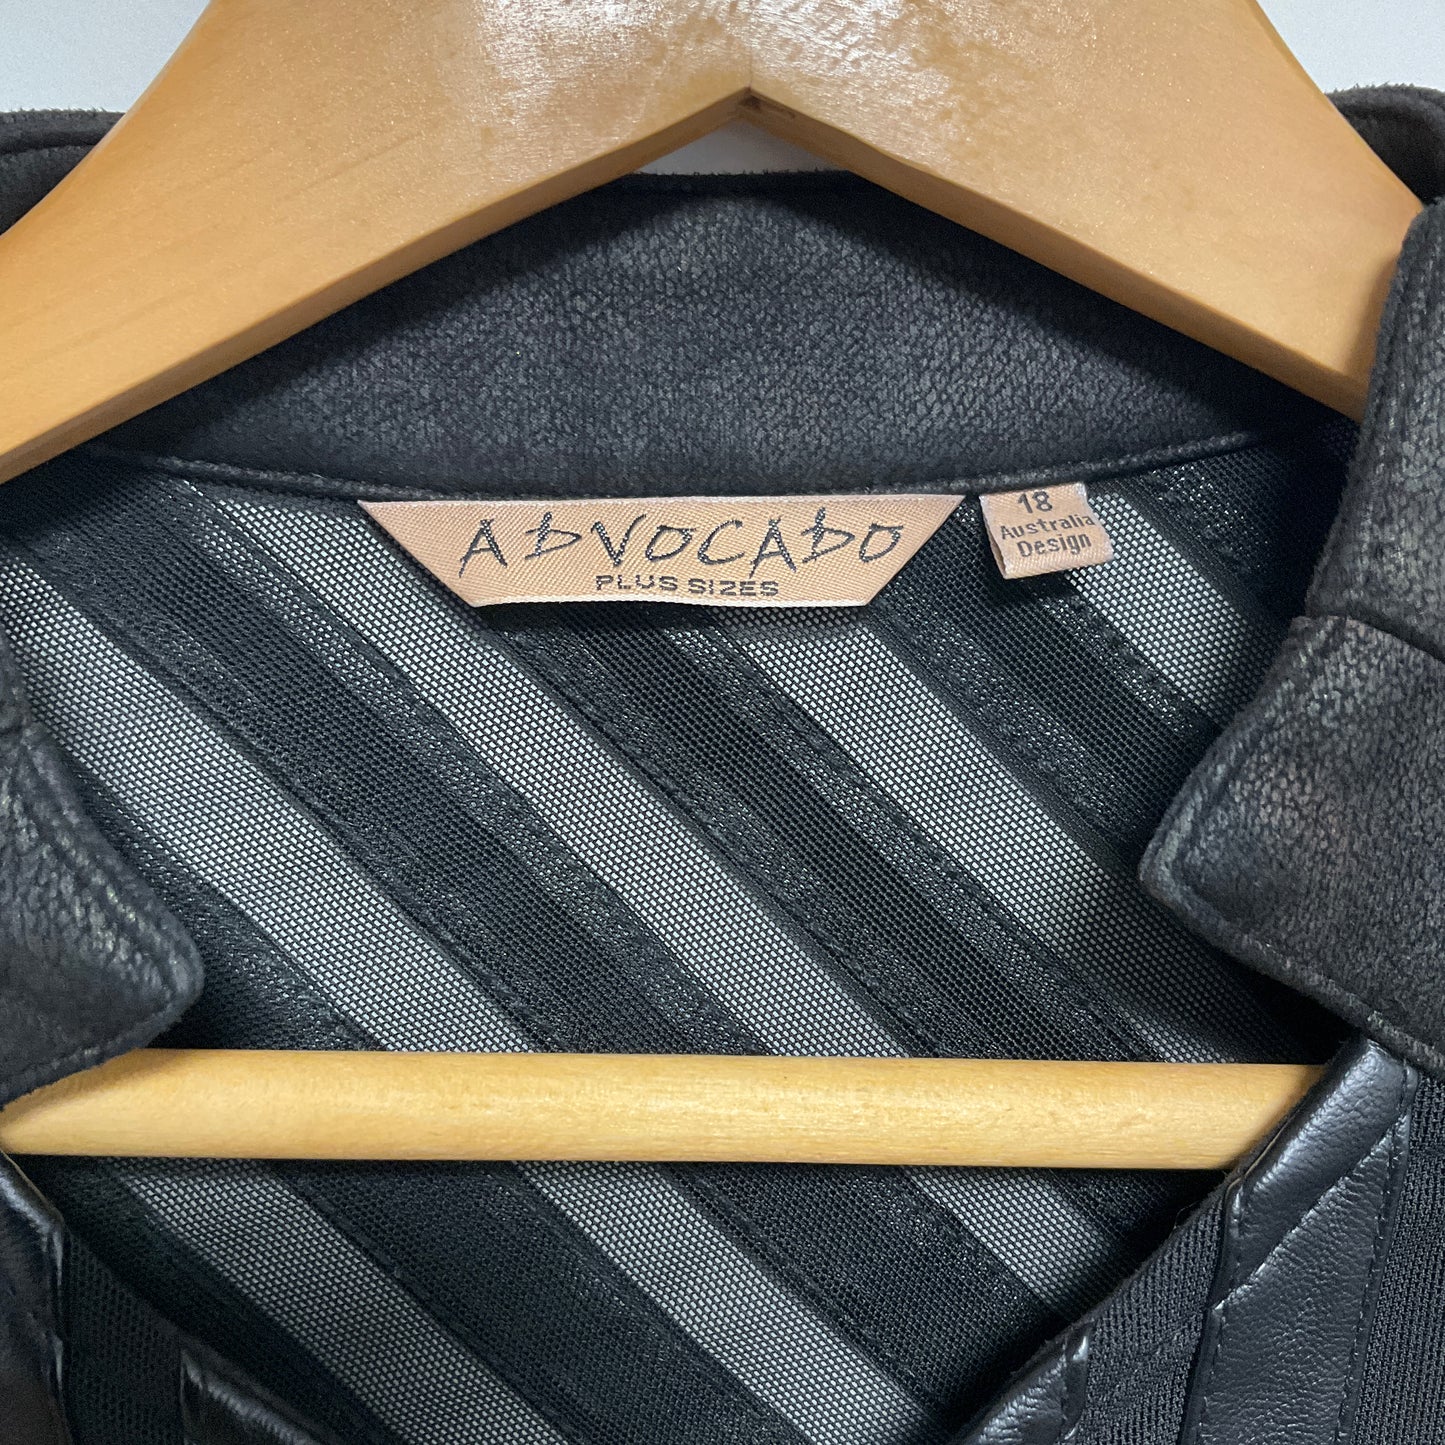 Advocado - Plus Size Ladies Jacket